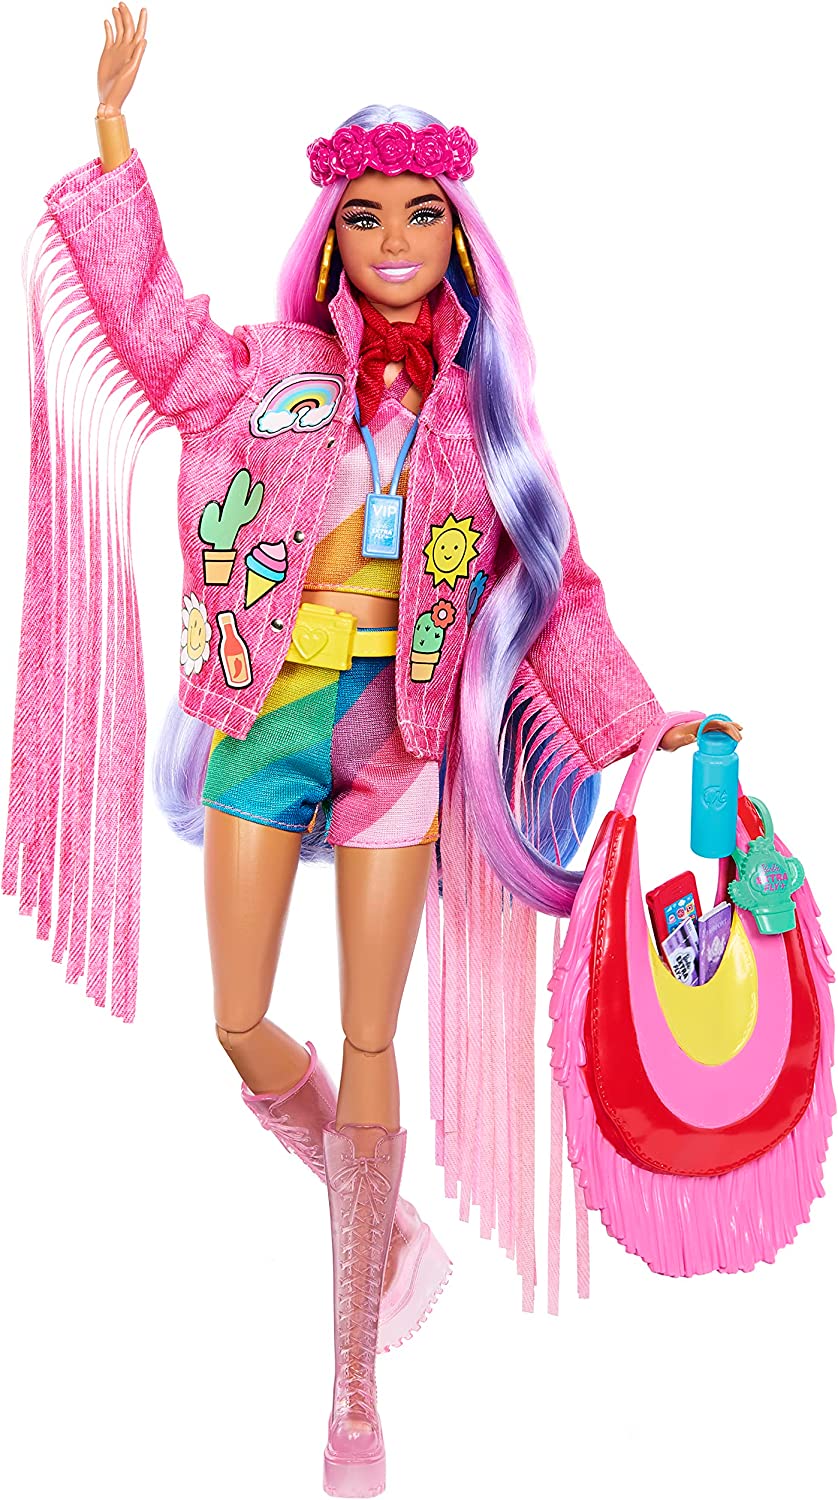 1682923946 Youloveit Com Barbie Extra Fly Desrt Doll2 